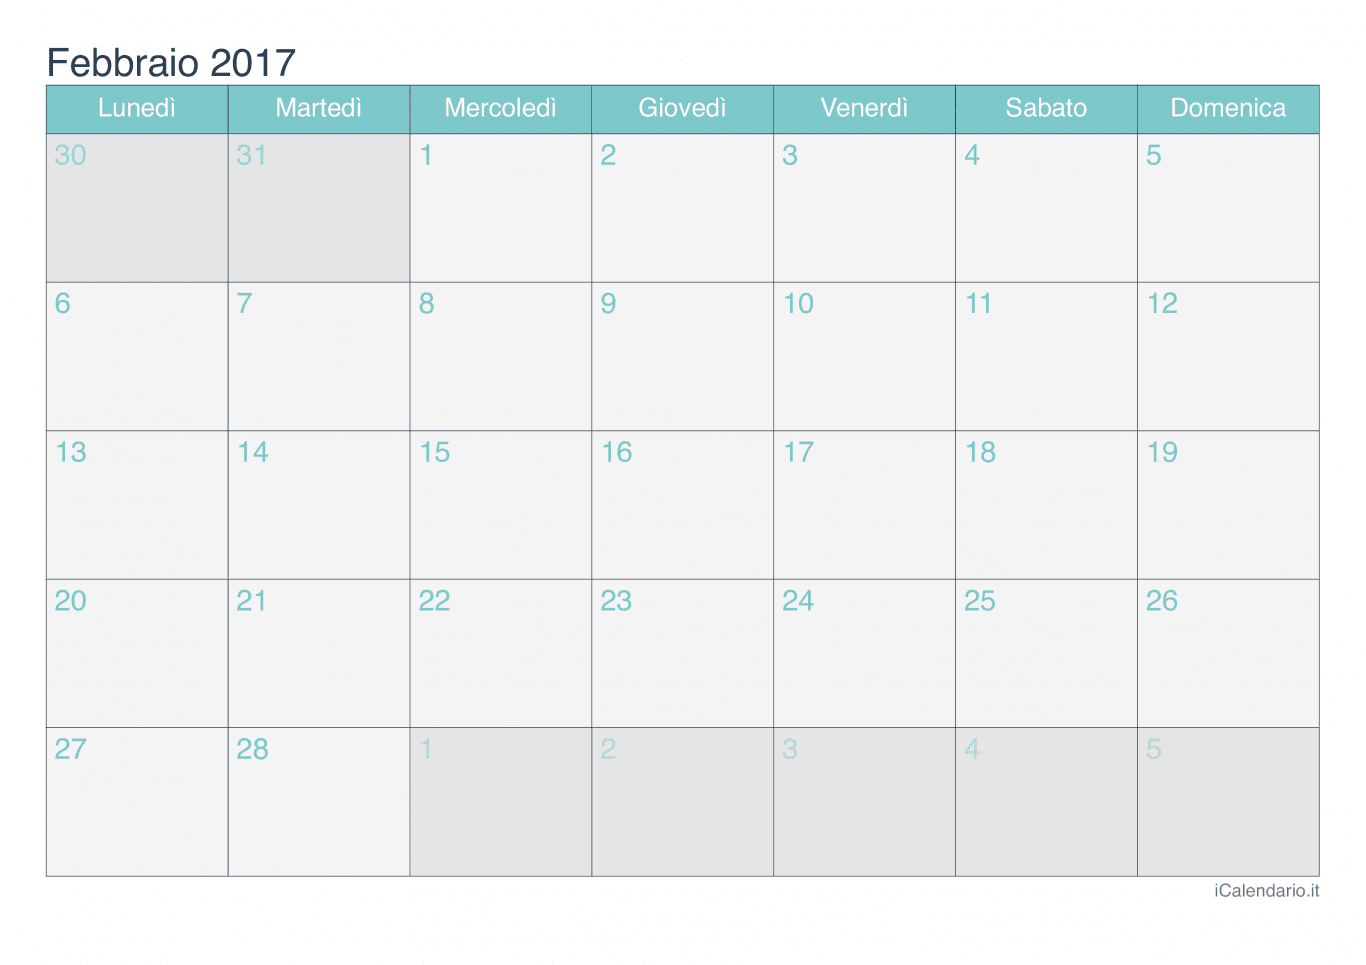 Calendario di febbraio 2017 - Turchese